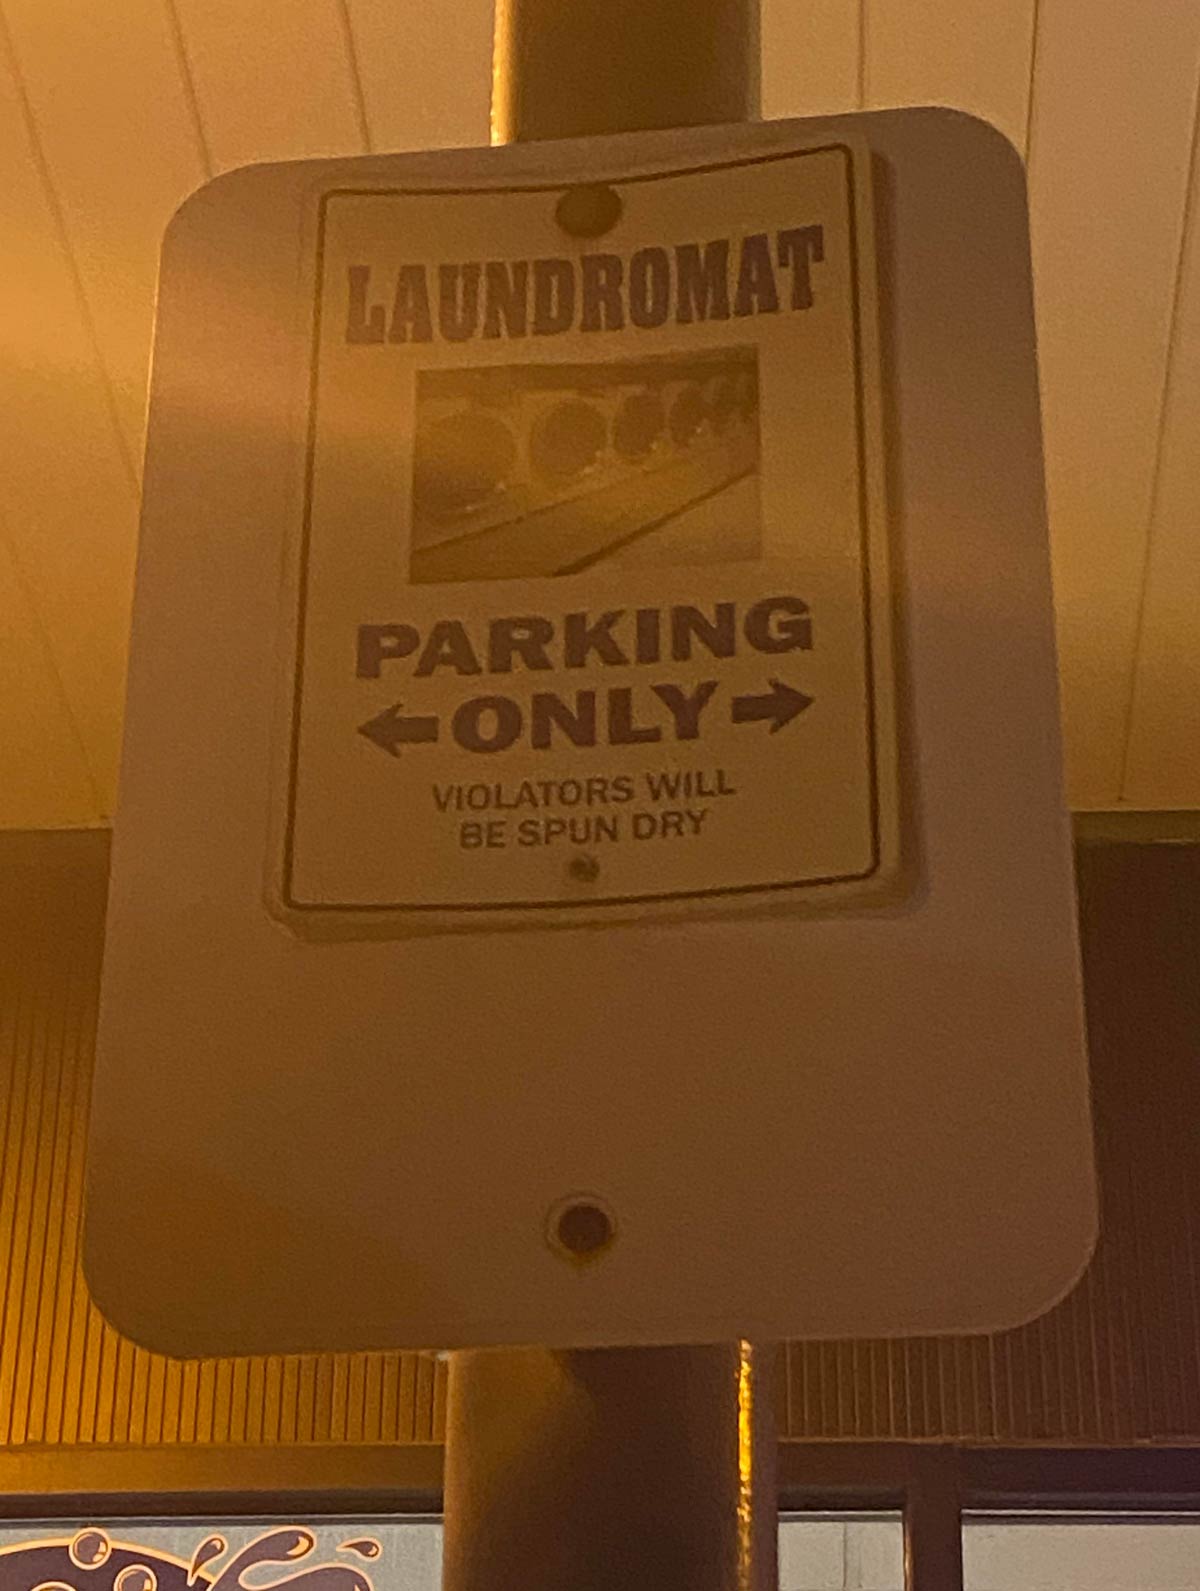 Warning sign at my local laundromat